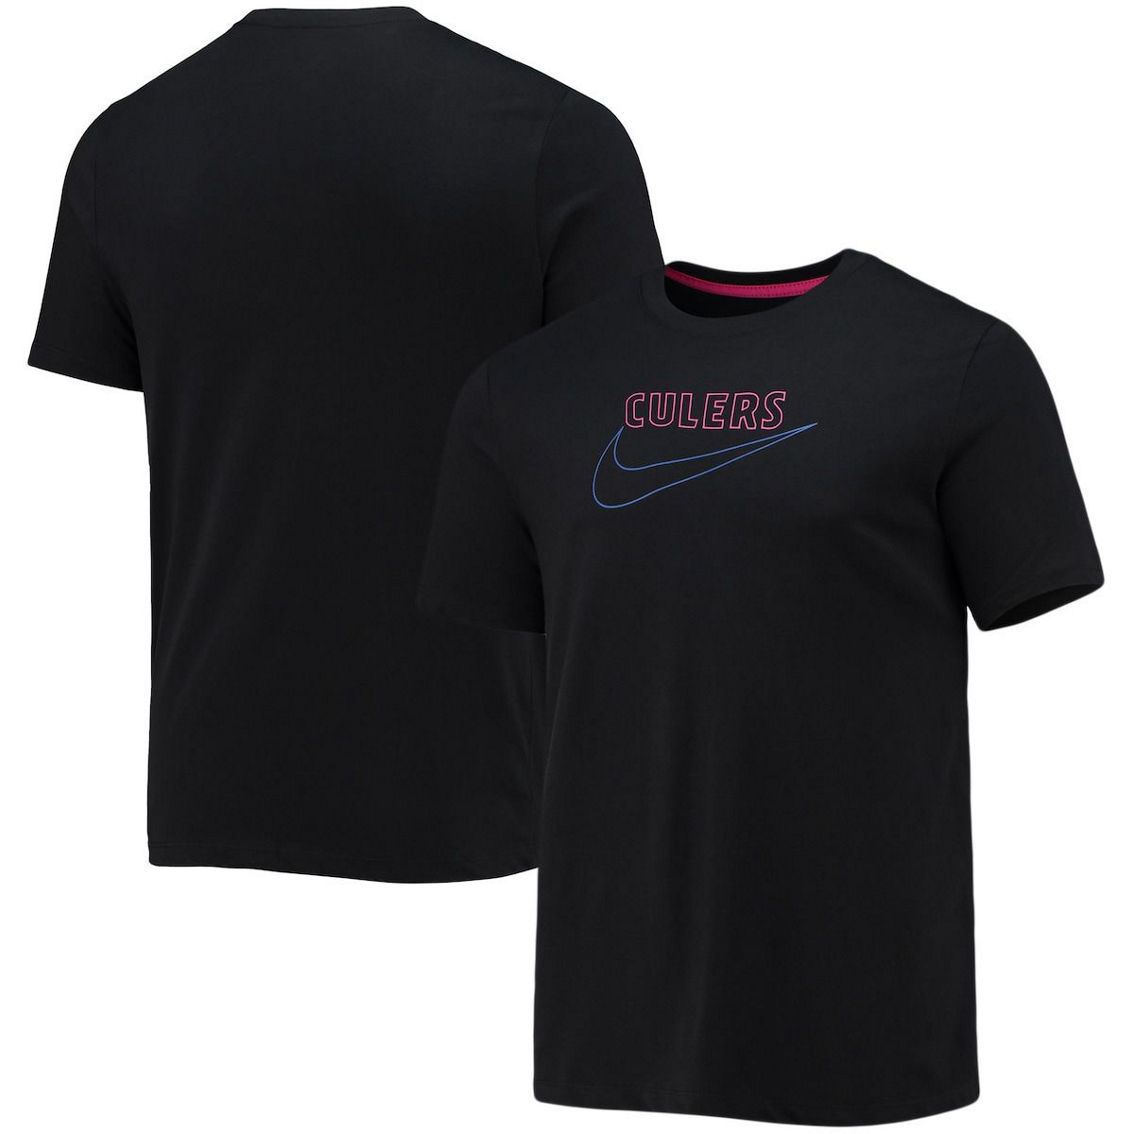 Nike Men's Black Barcelona Swoosh Club T-Shirt - Image 2 of 4